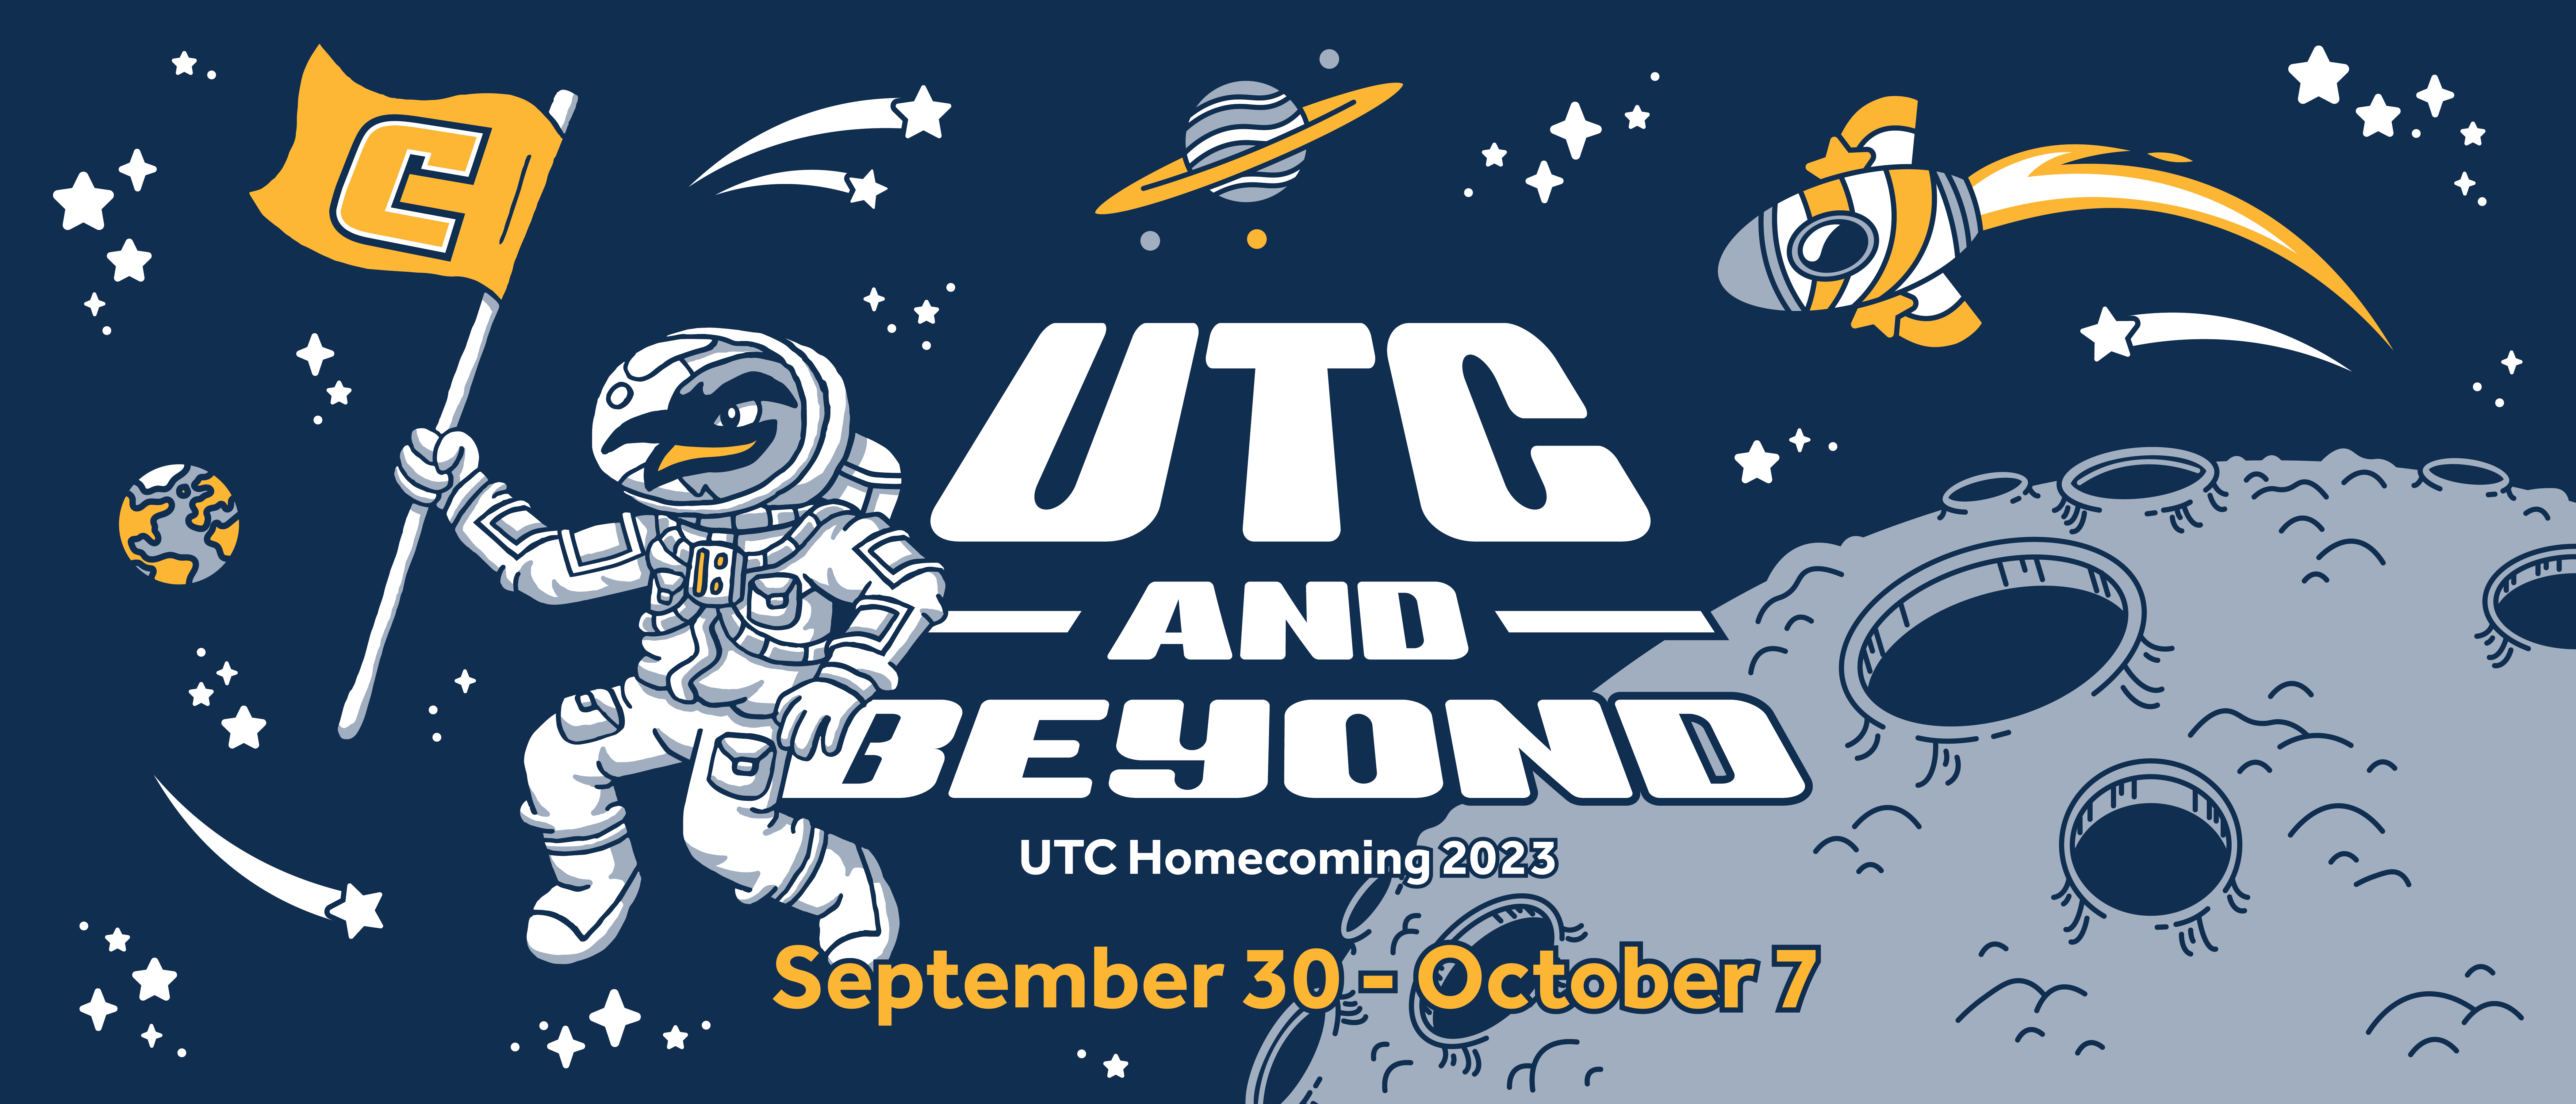 UTC and Beyond UTC Homecoming. September 30-October 7